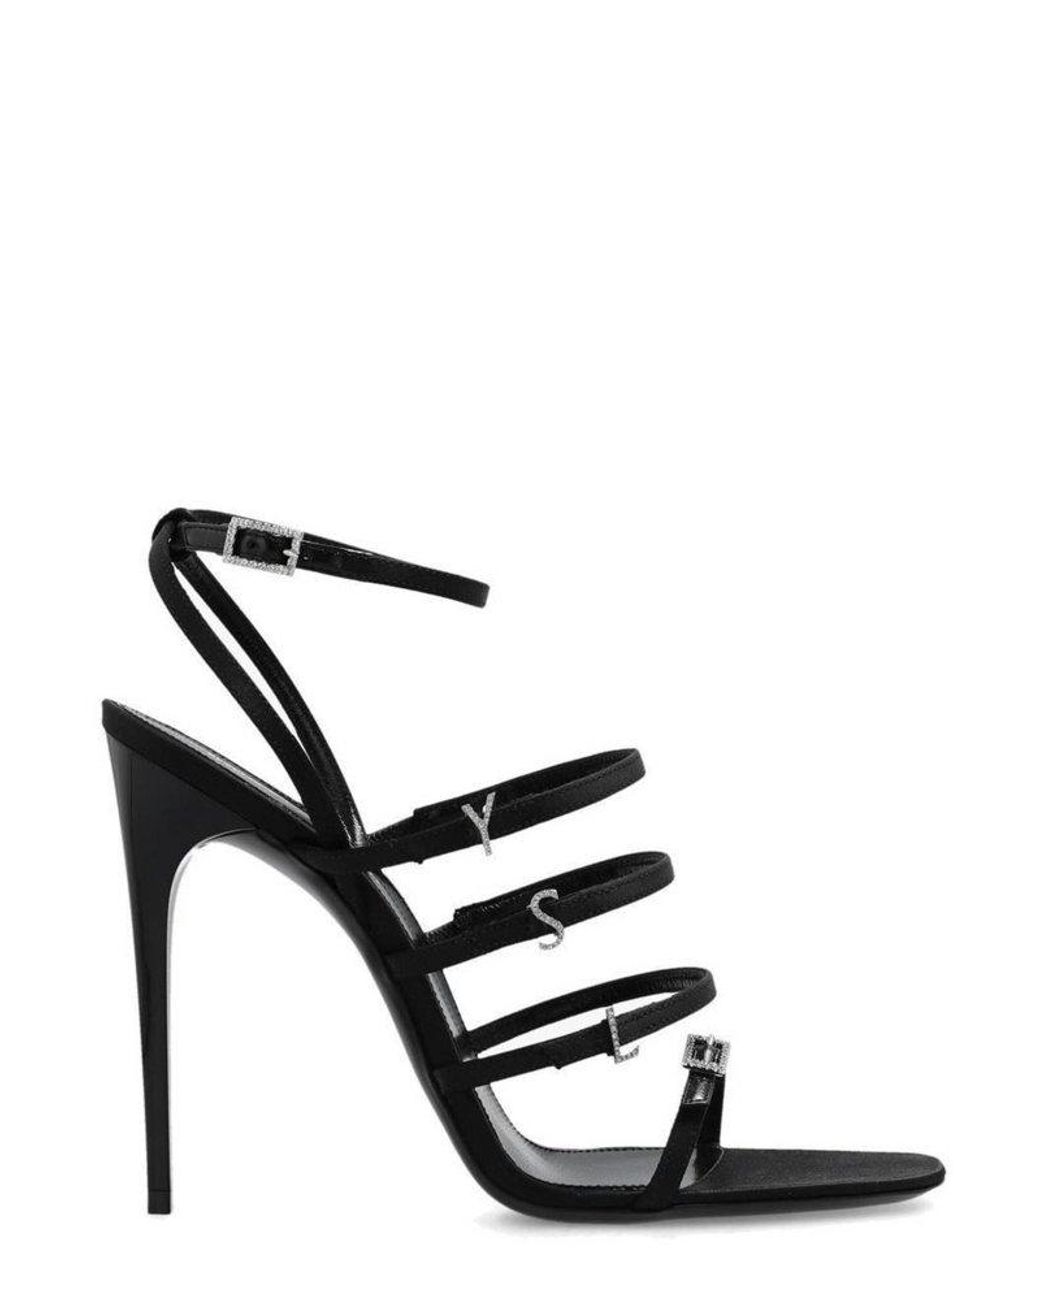 Saint Laurent Jerry Heeled Sandals in Black | Lyst